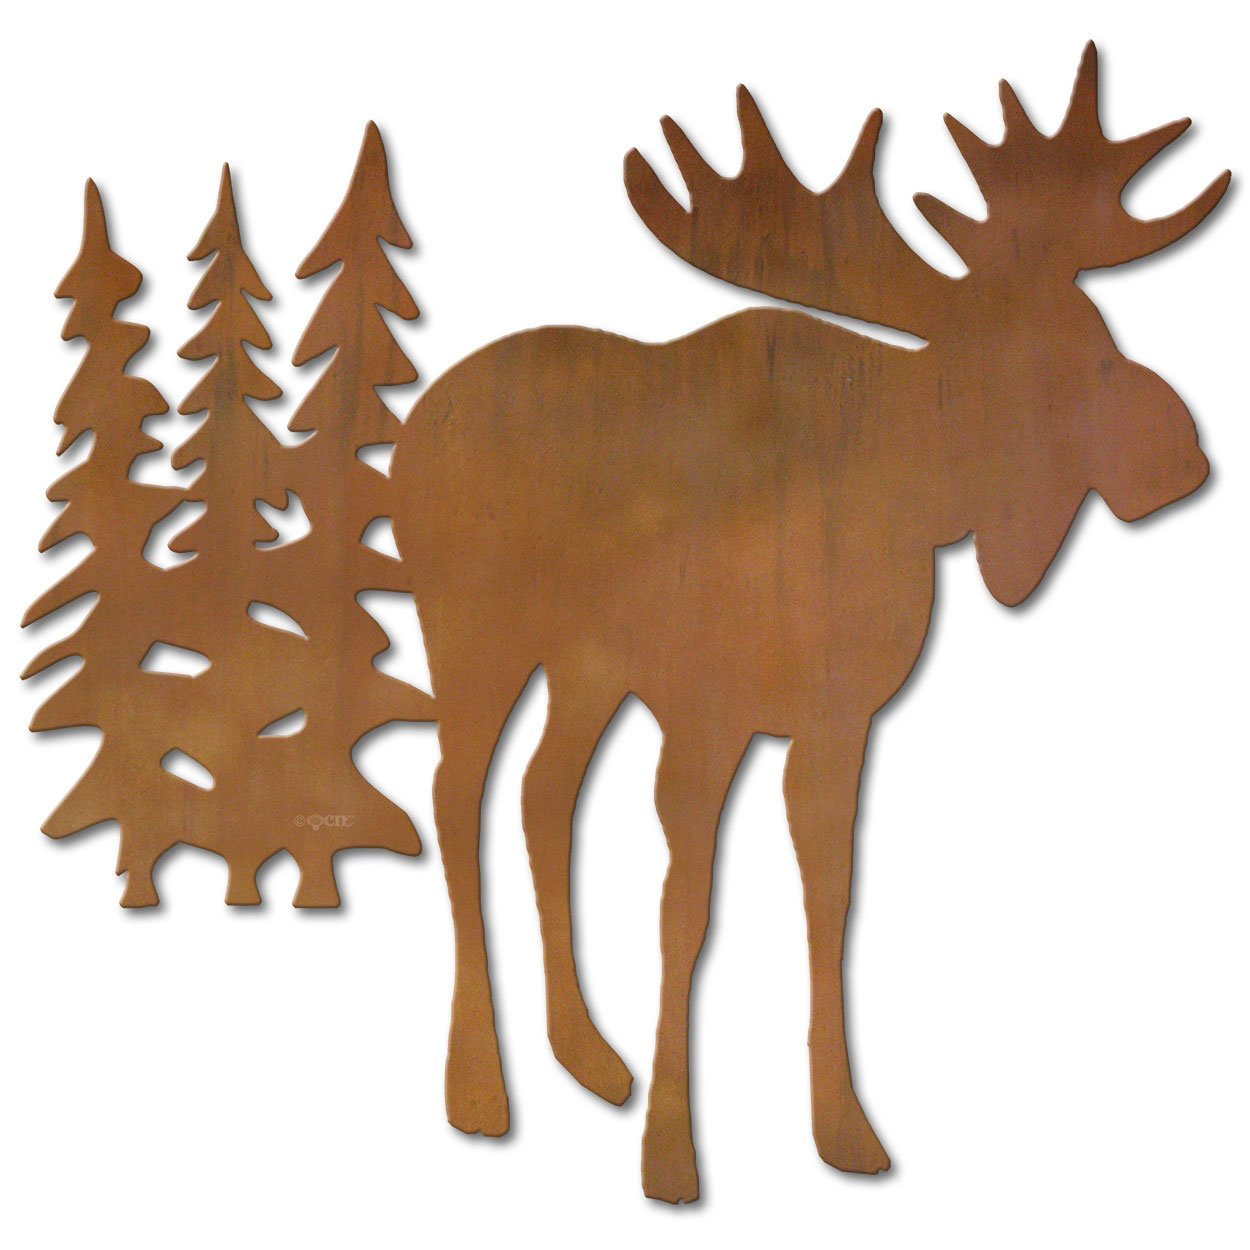 601035 - 36in Horizontal Moose and Trees Lg Rustic Metal Wall Decor